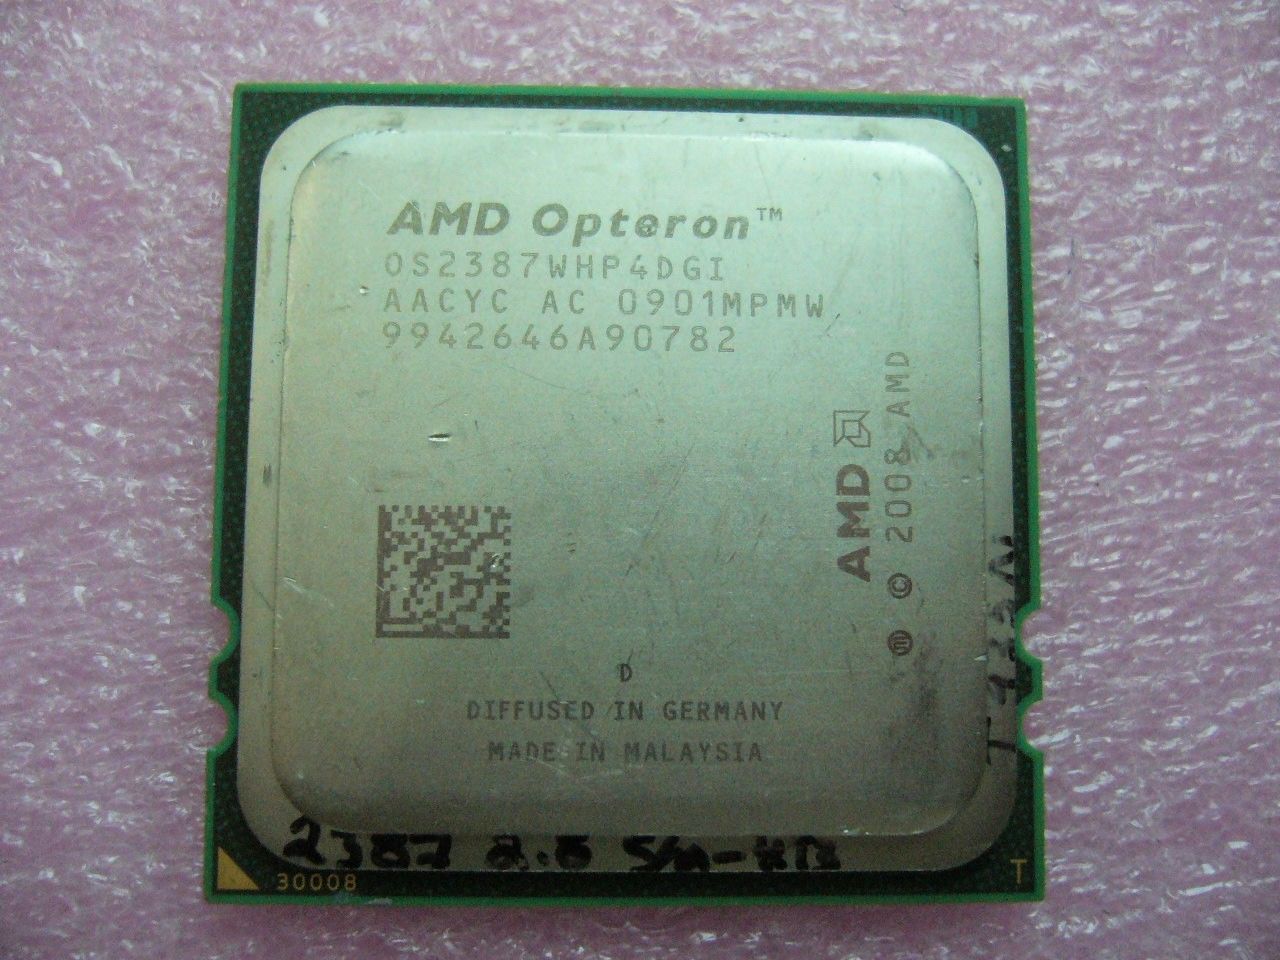 QTY 1x AMD Opteron 2387 2.8 GHz Quad-Core (OS2387WHP4DGI) CPU Socket F 1207